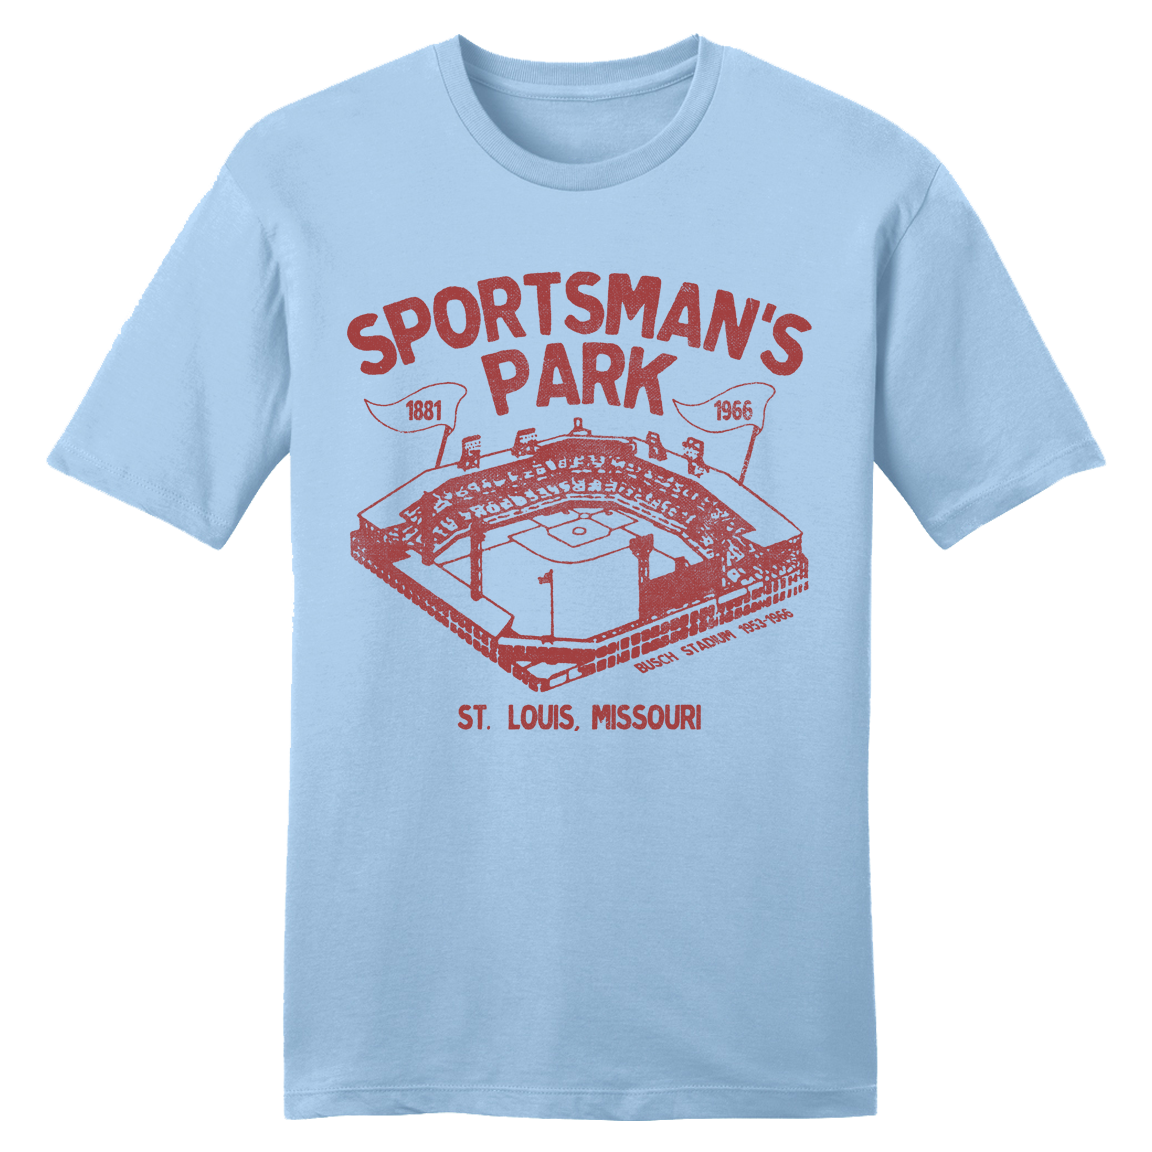 Sportsman's Park tee